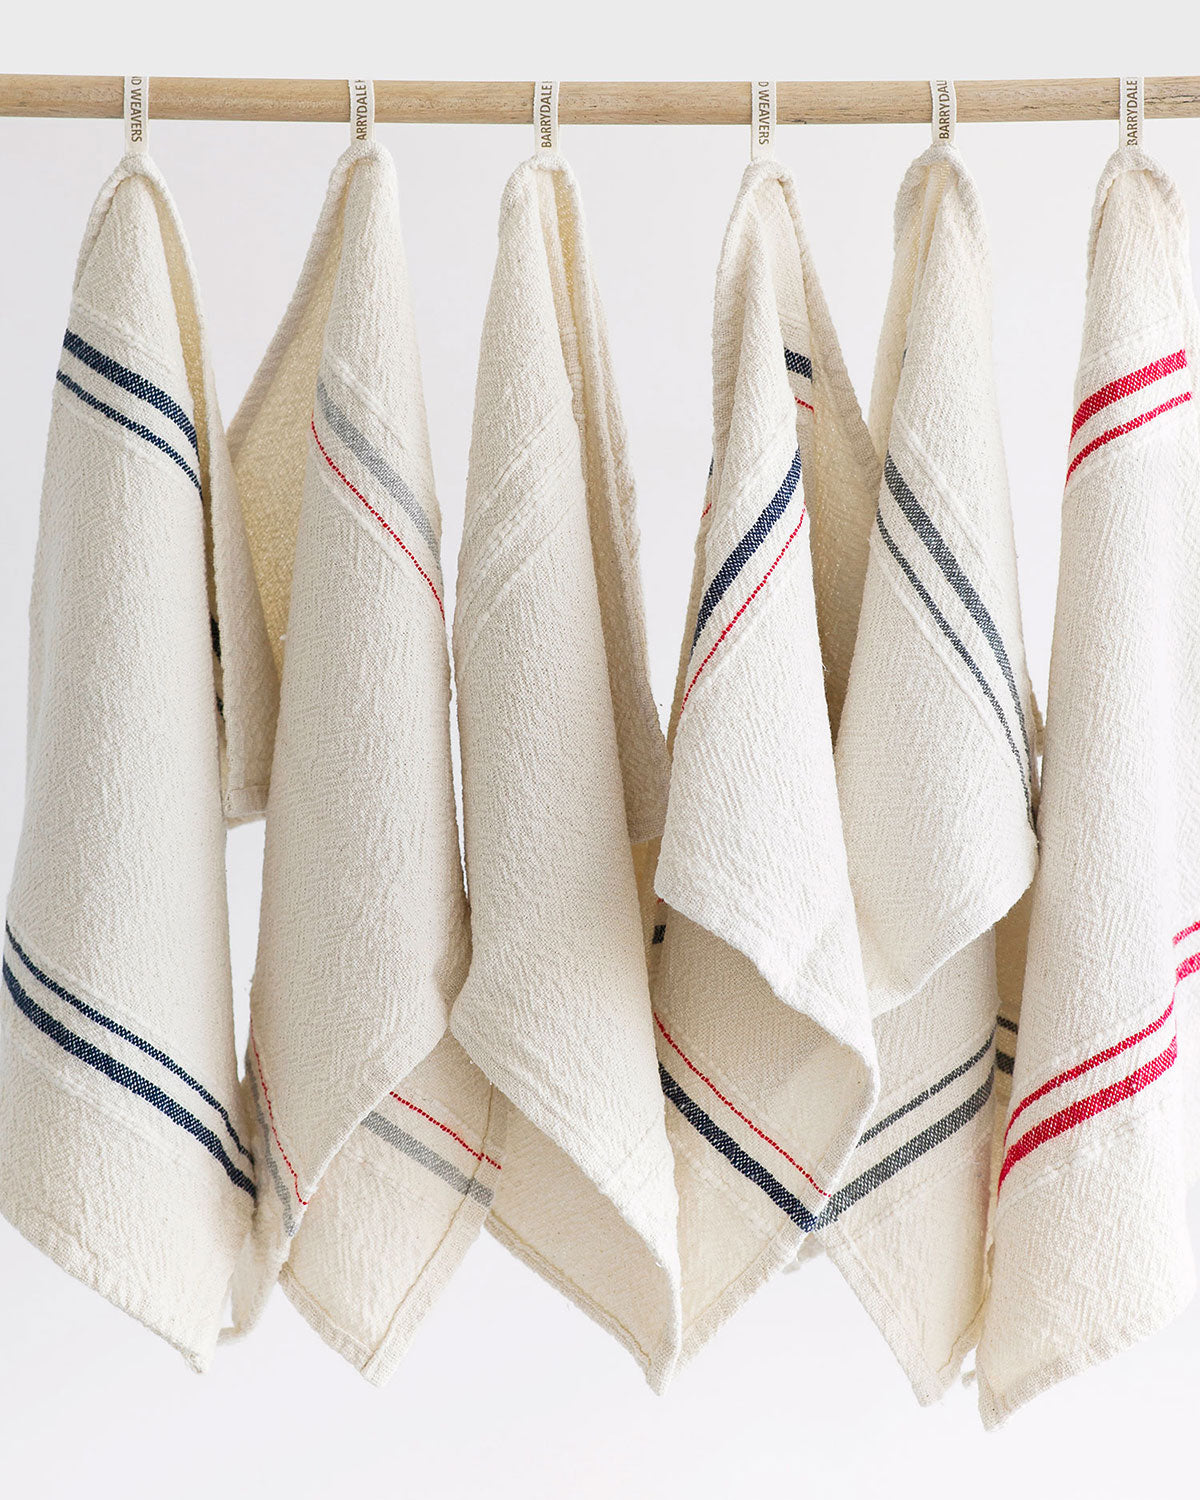 Towels_KitchenTowel_TeaTowel_Handwoven_Striped